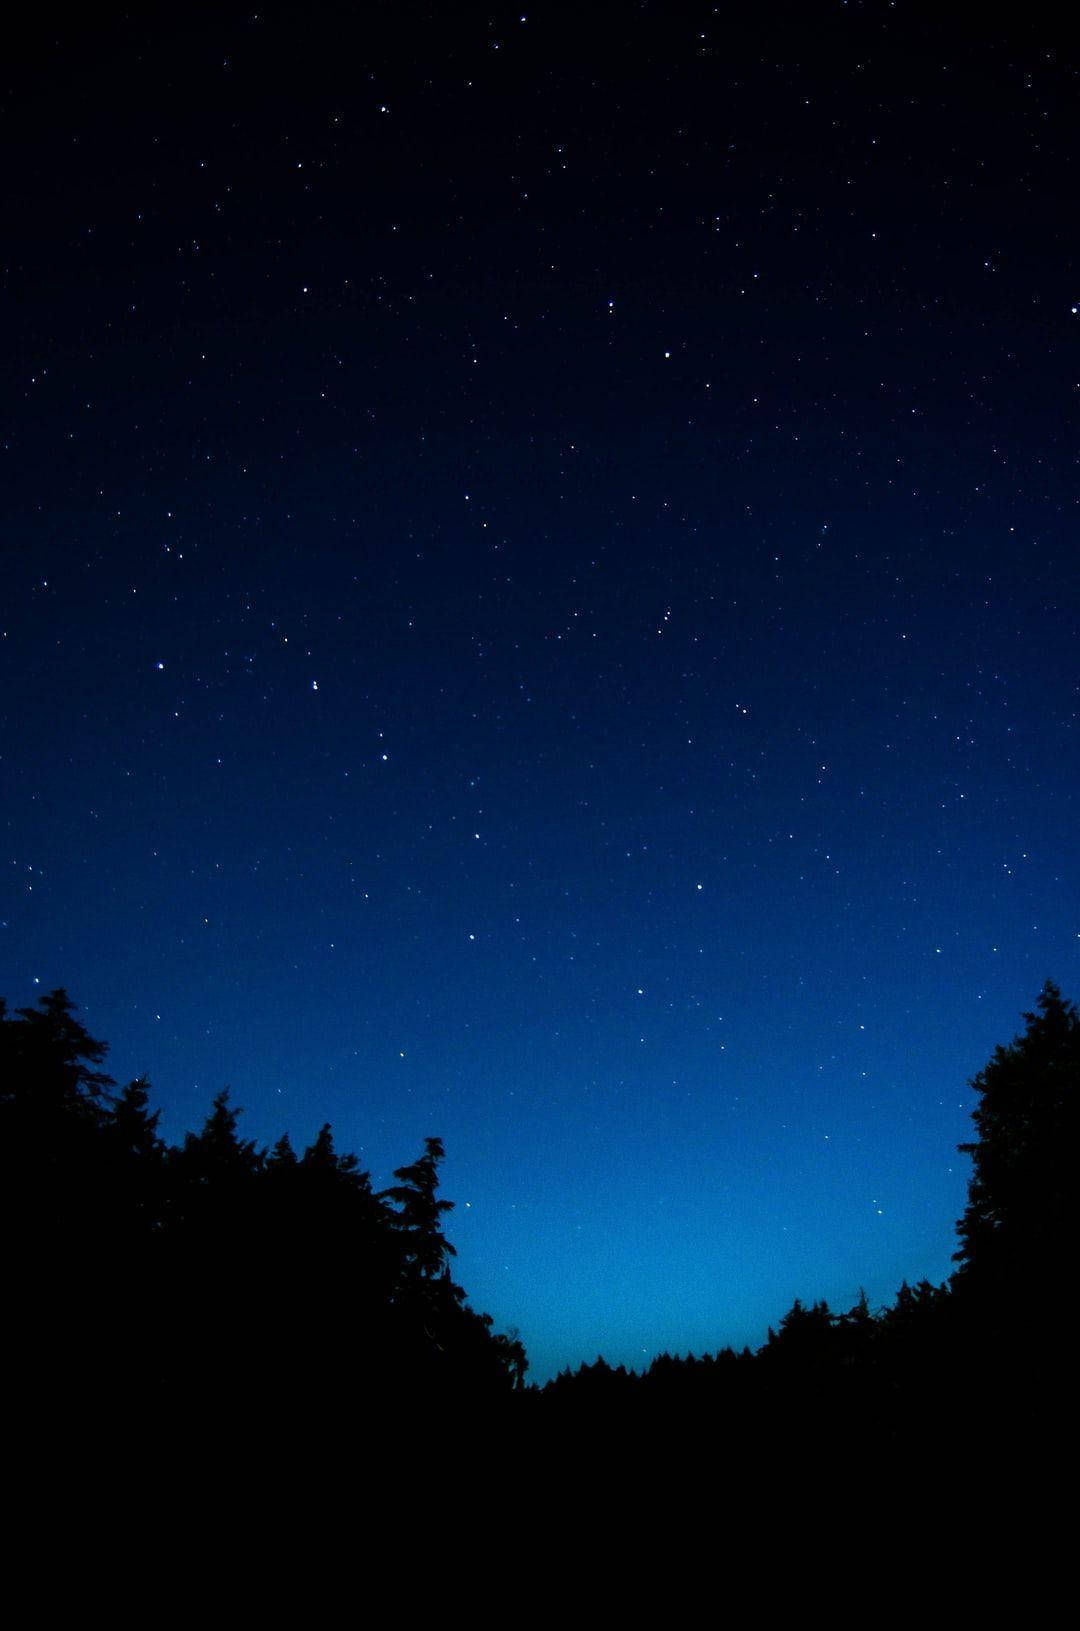 Sad Aesthetic Tumblr Dark Night Sky Background